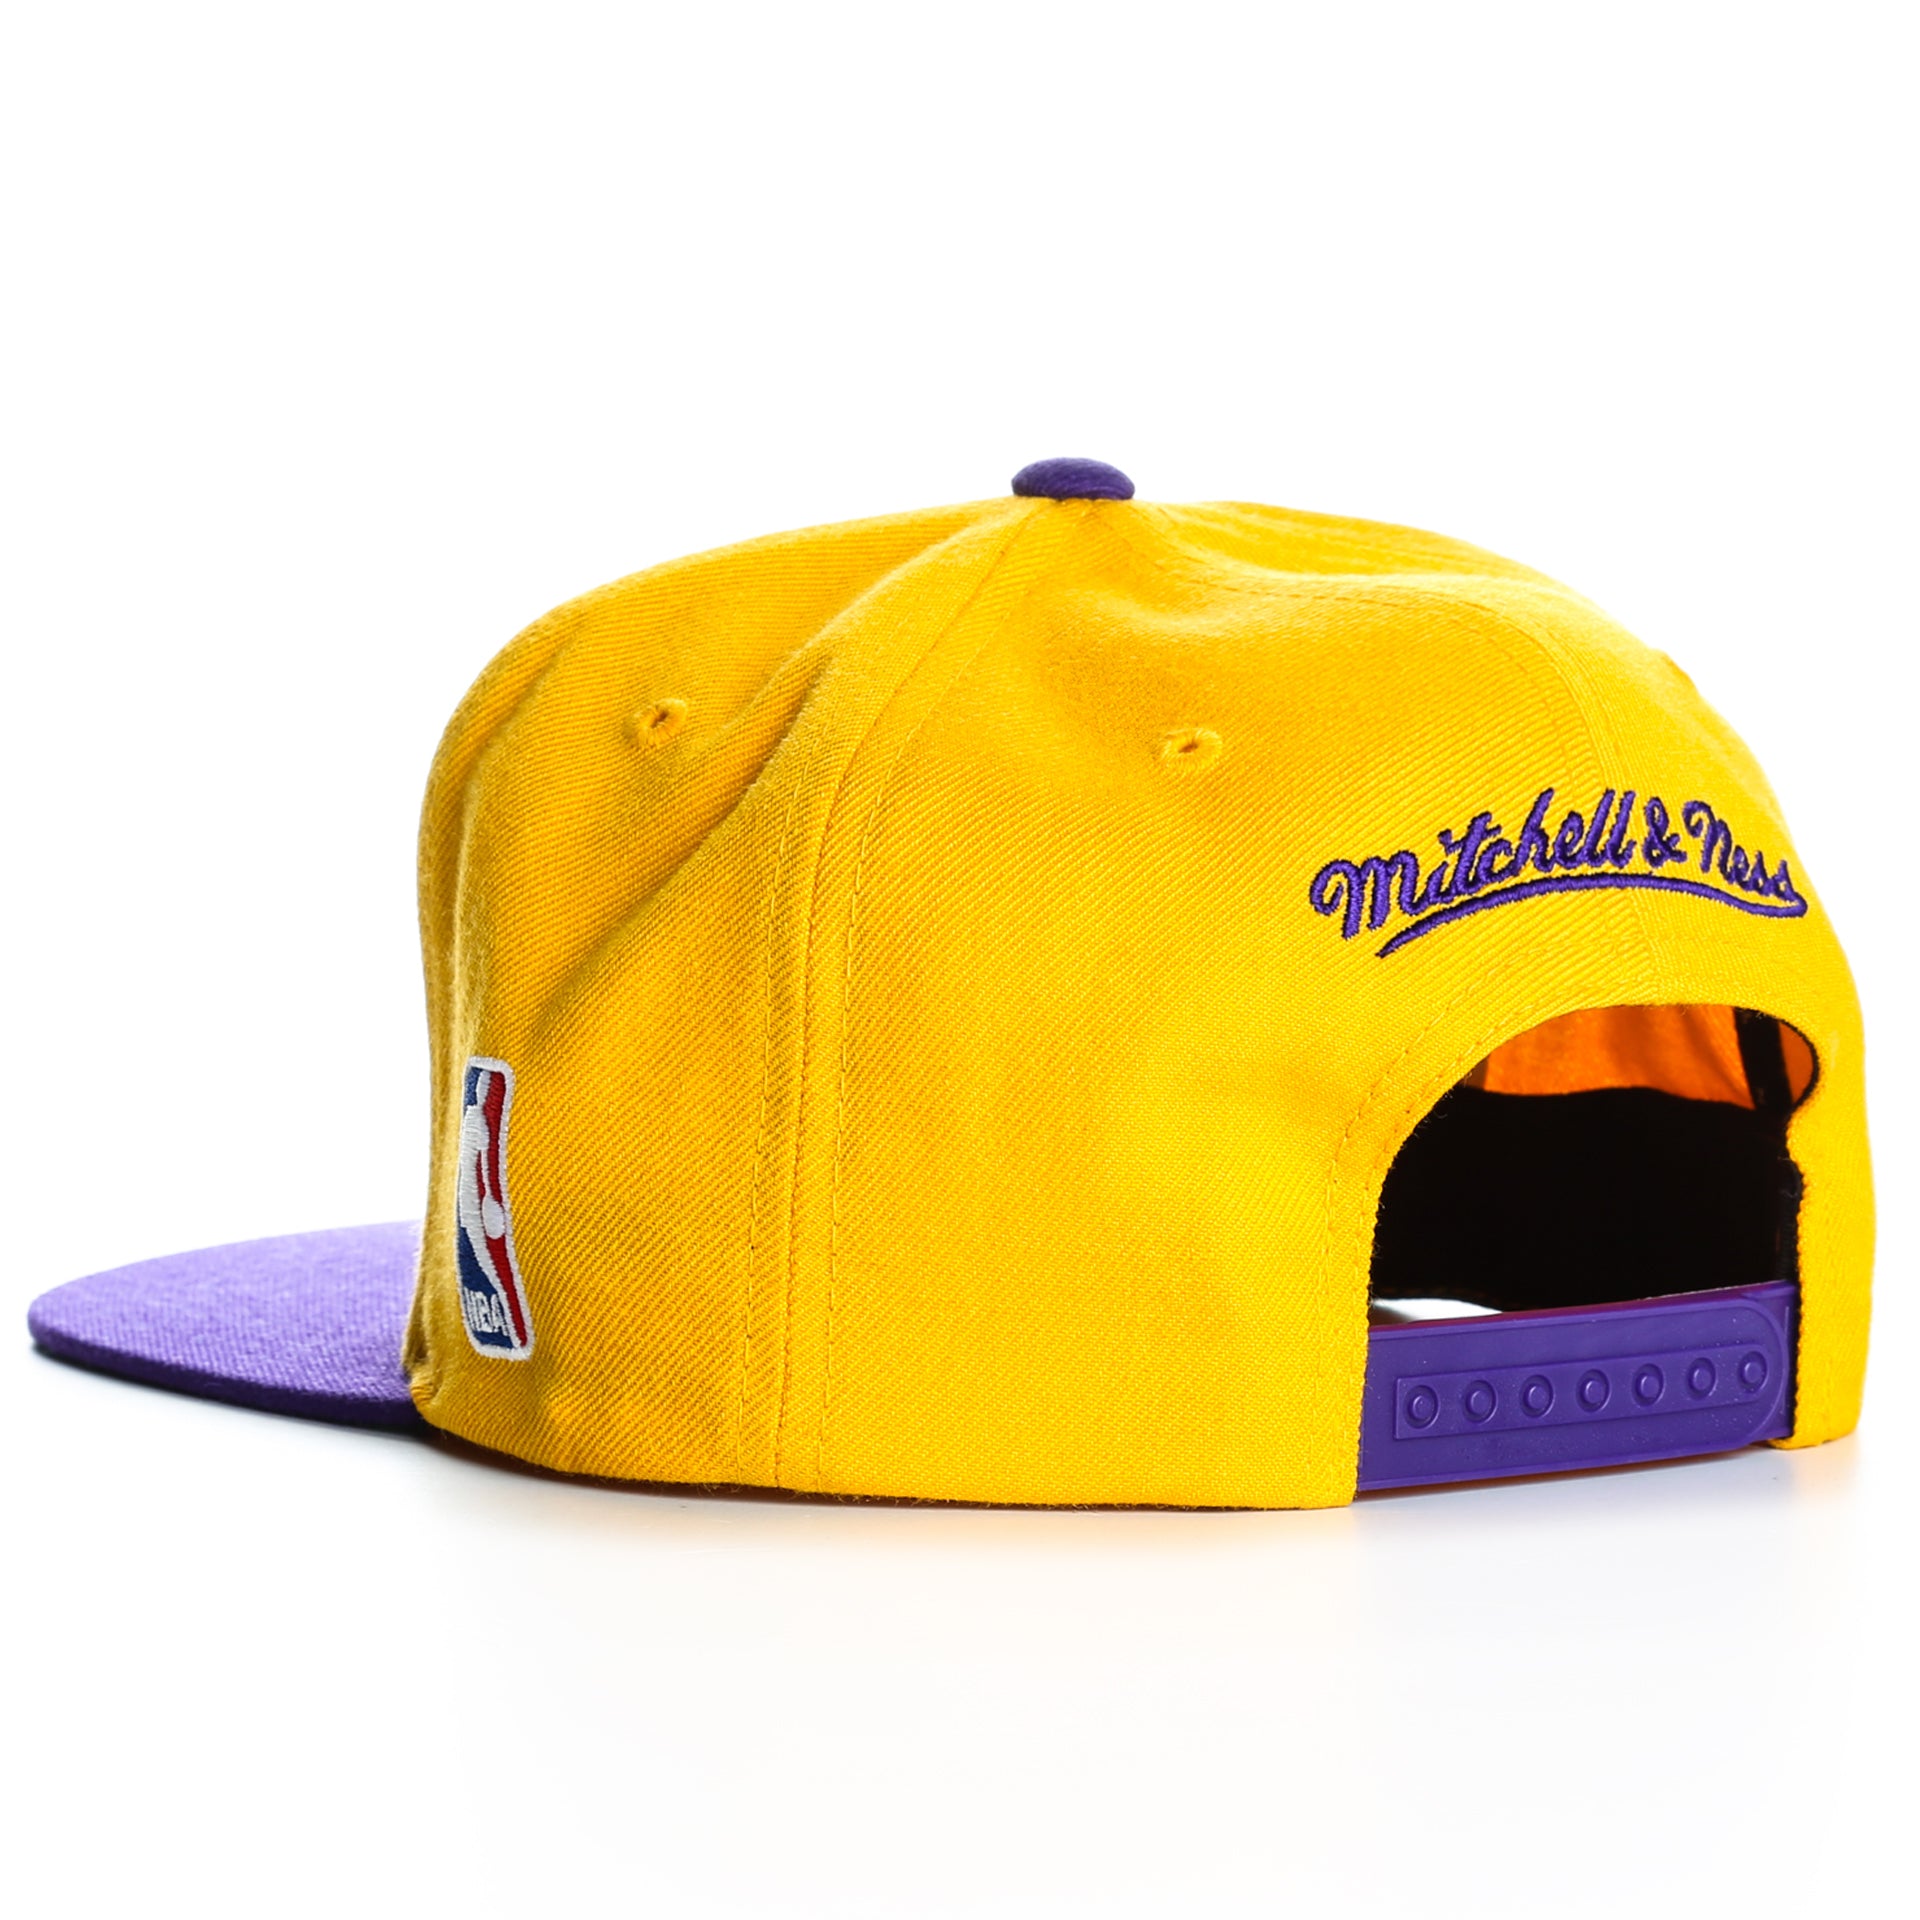 Mitchell & Ness Los Angeles Lakers Snapback Hat - Purple/Black/Yellow - LA  Lakers Cap for Men